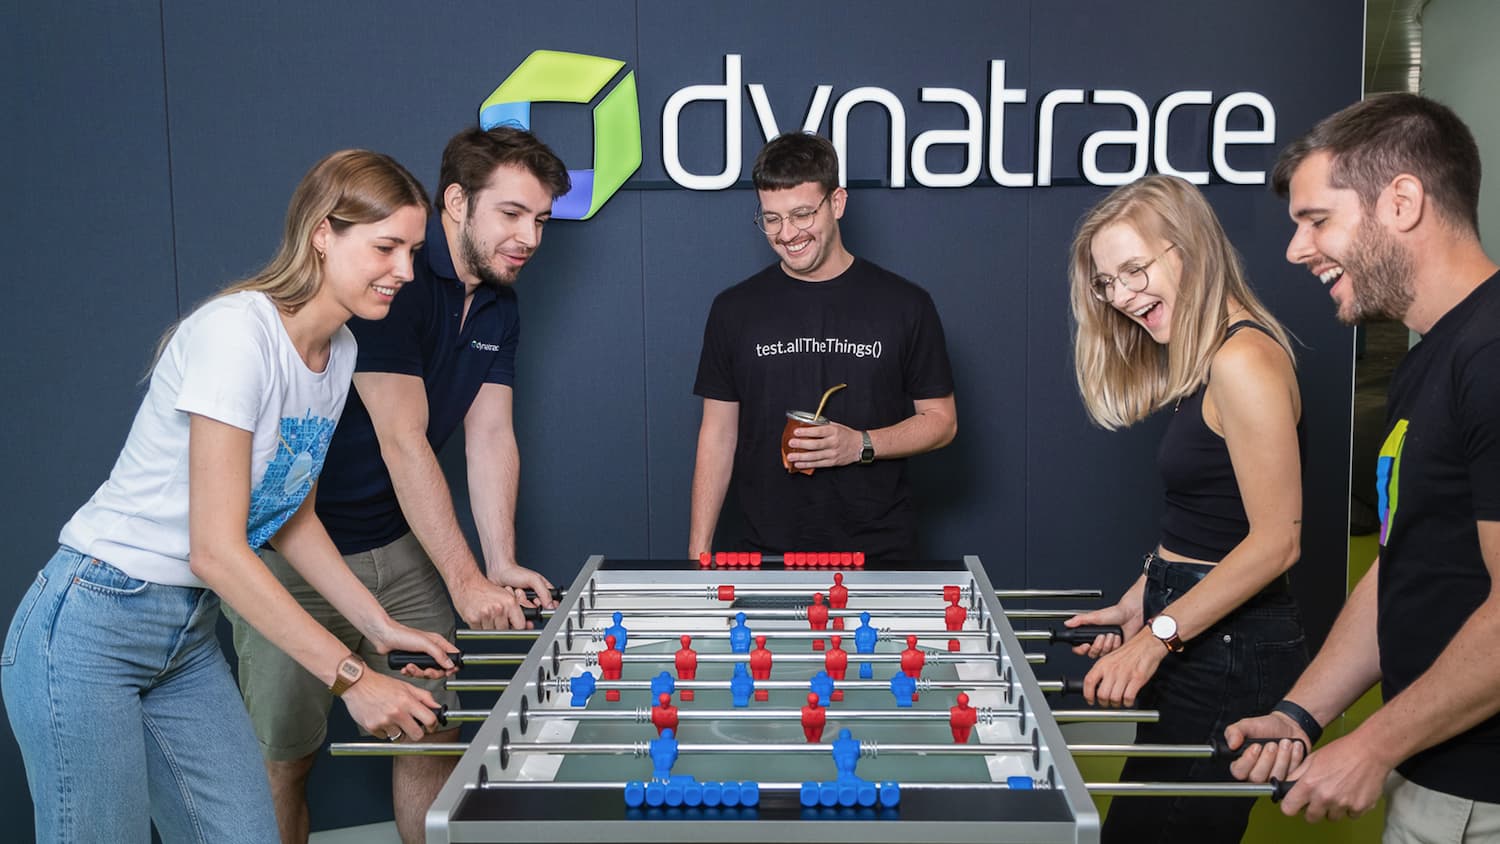 Dynatrace Austria GmbH